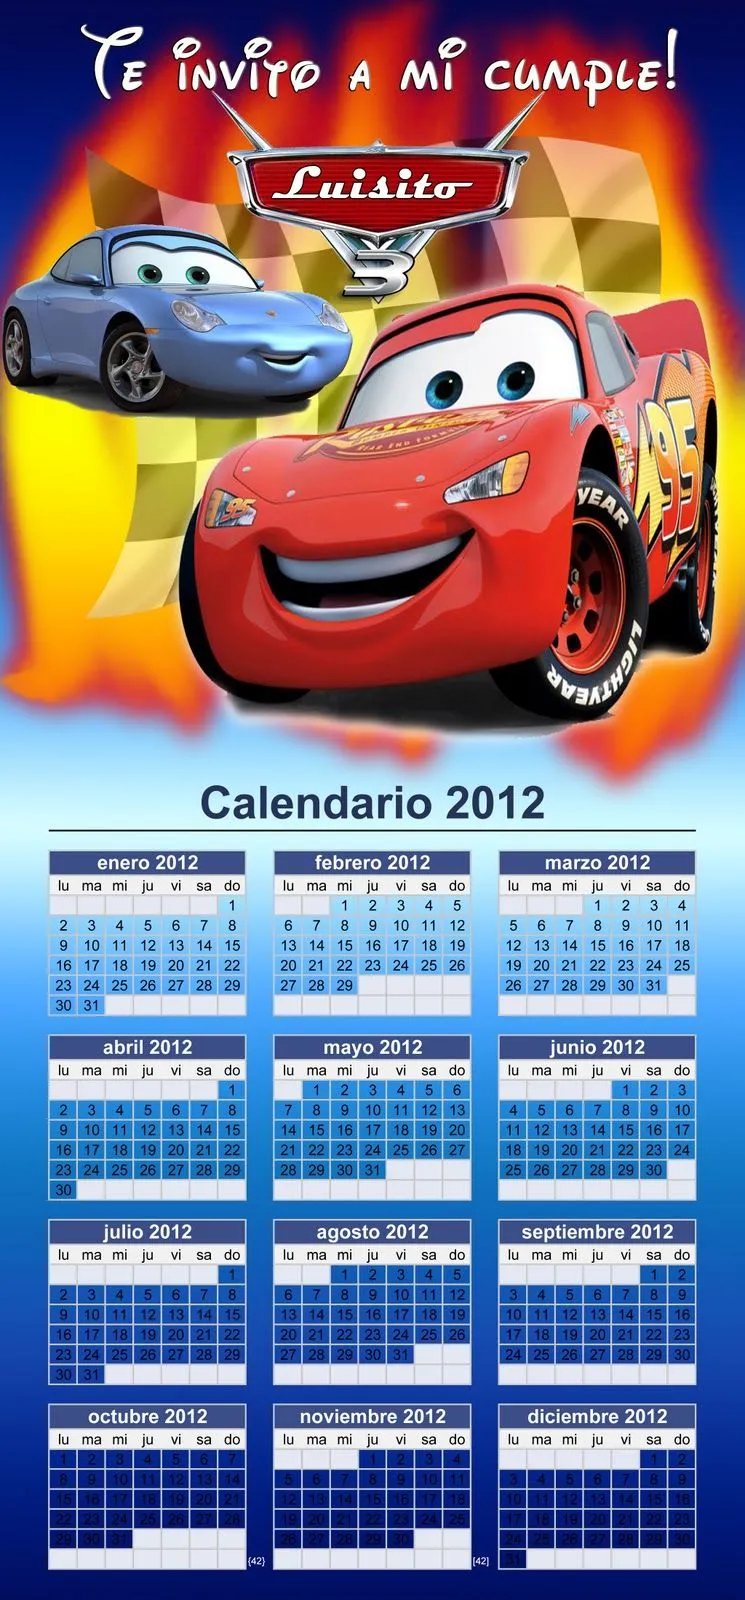 Calendario 2012 de Cars (la película) - Imagui